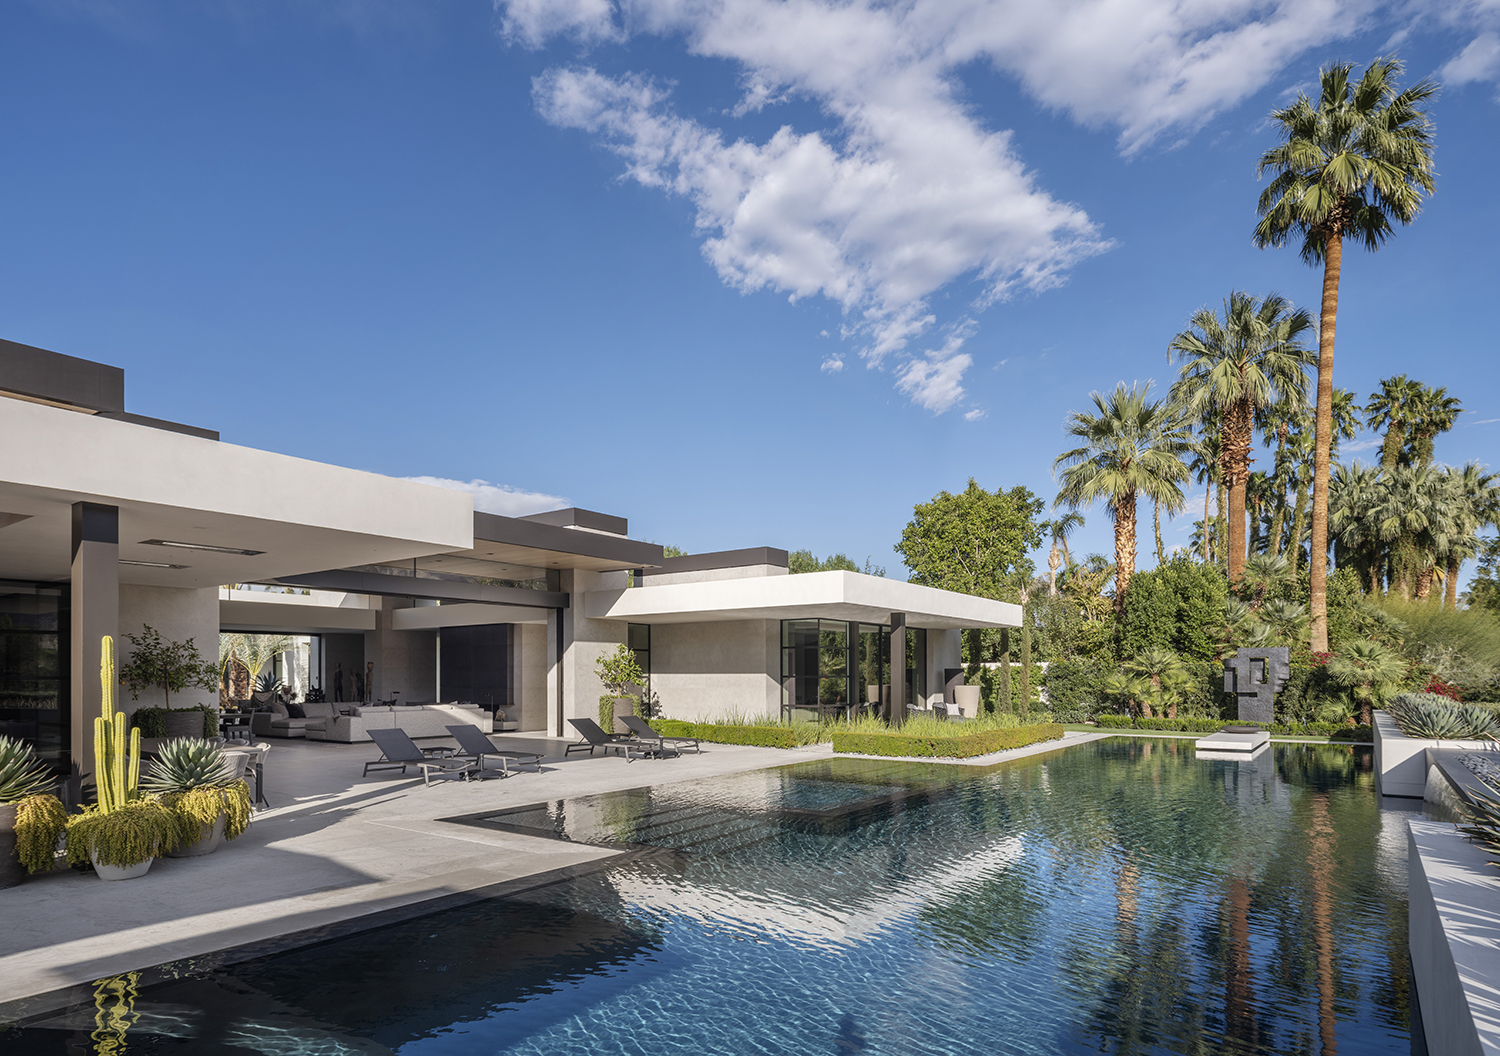 Modern california desert home featuring an impressive pool